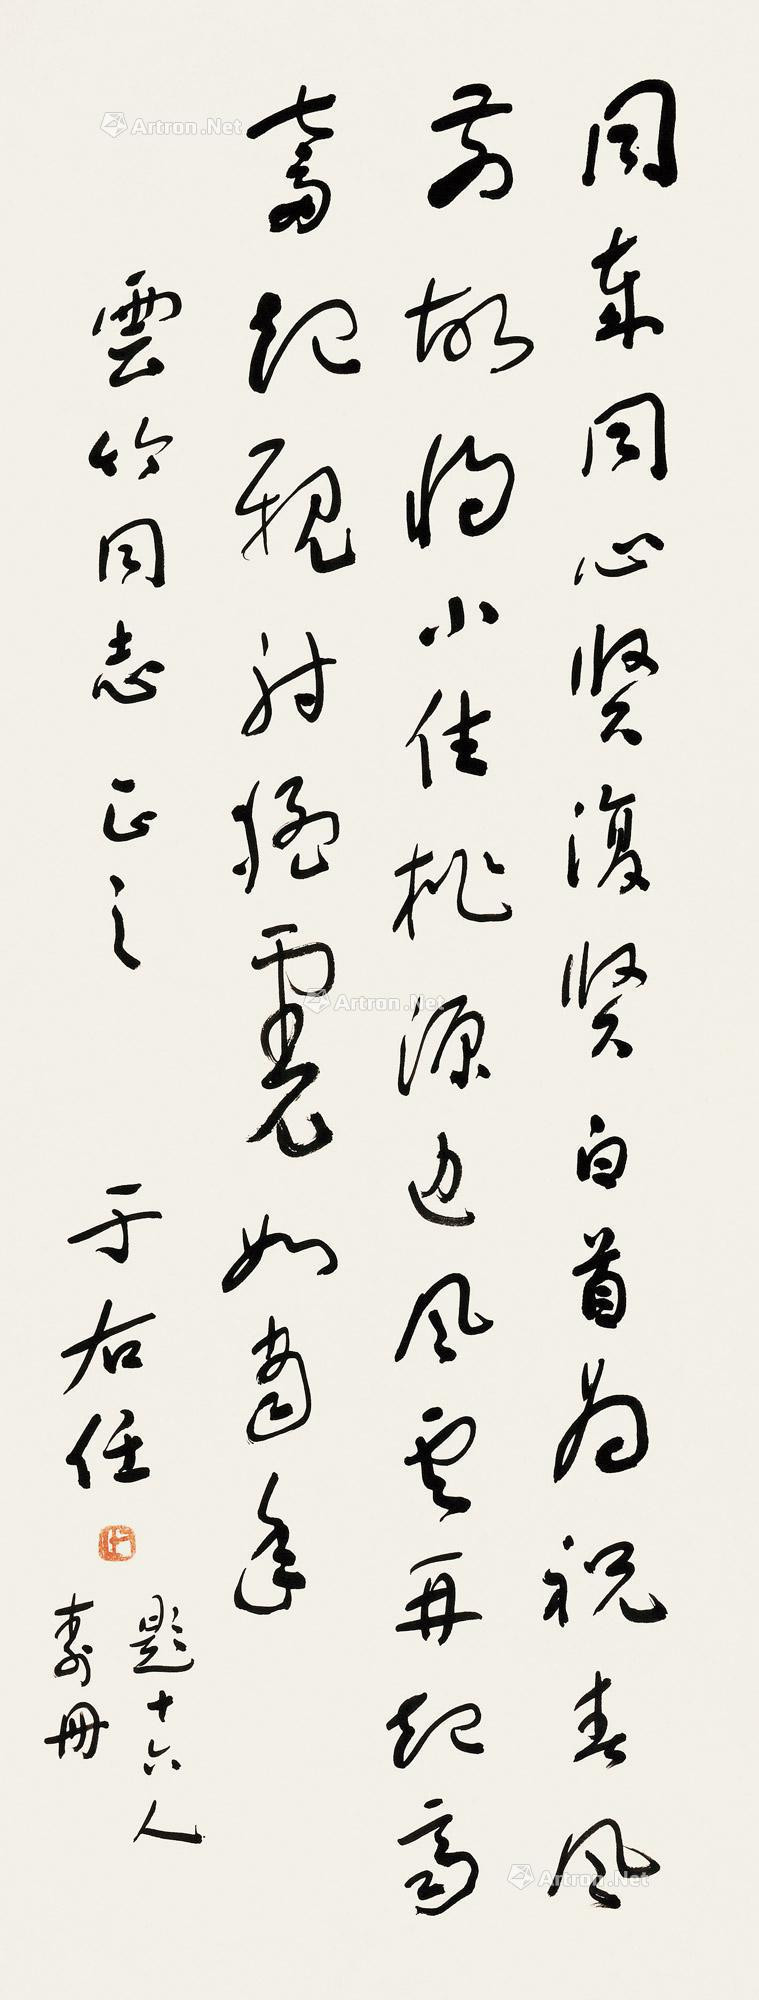 Calligraphy  in Cursive  Script